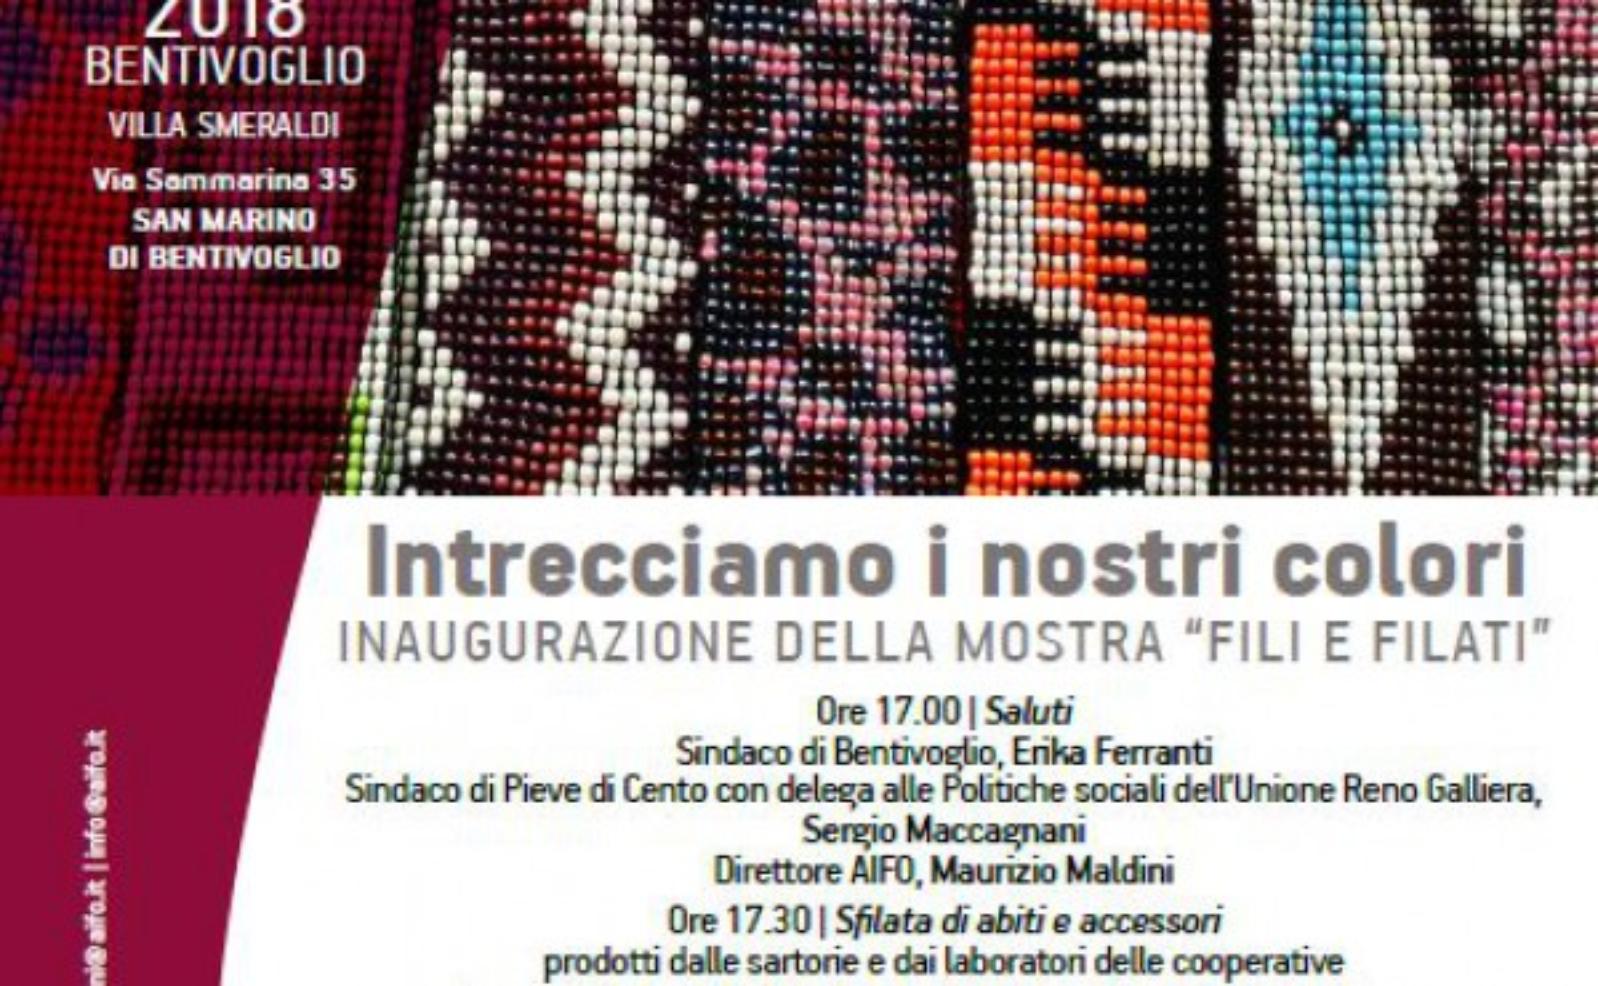 Fashion show & exhibition "Fili e filati"